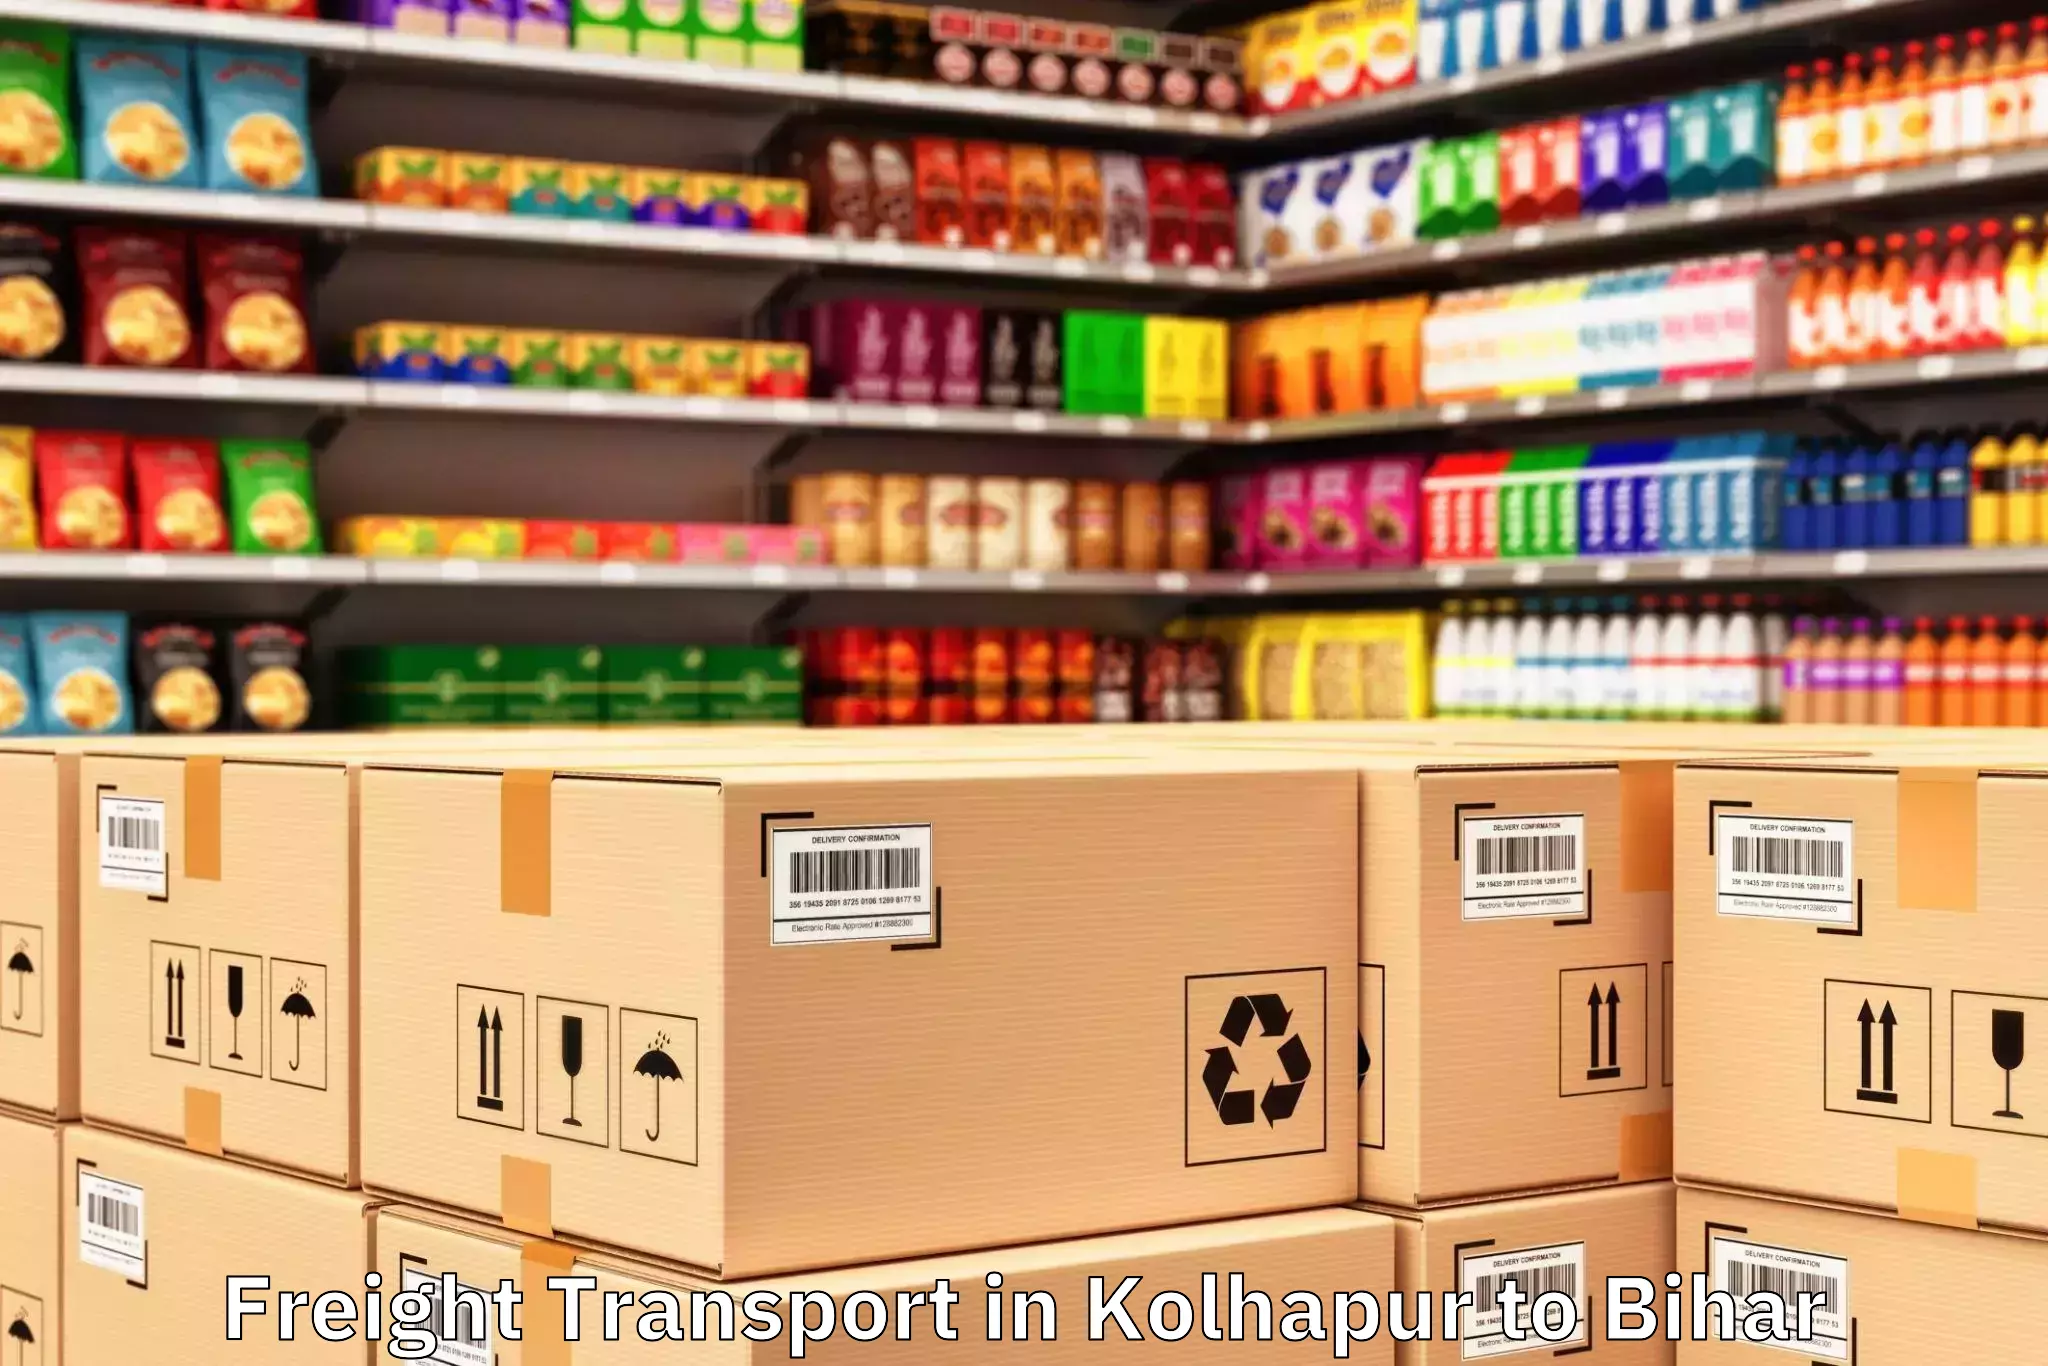 Efficient Kolhapur to Chandanpura Freight Transport